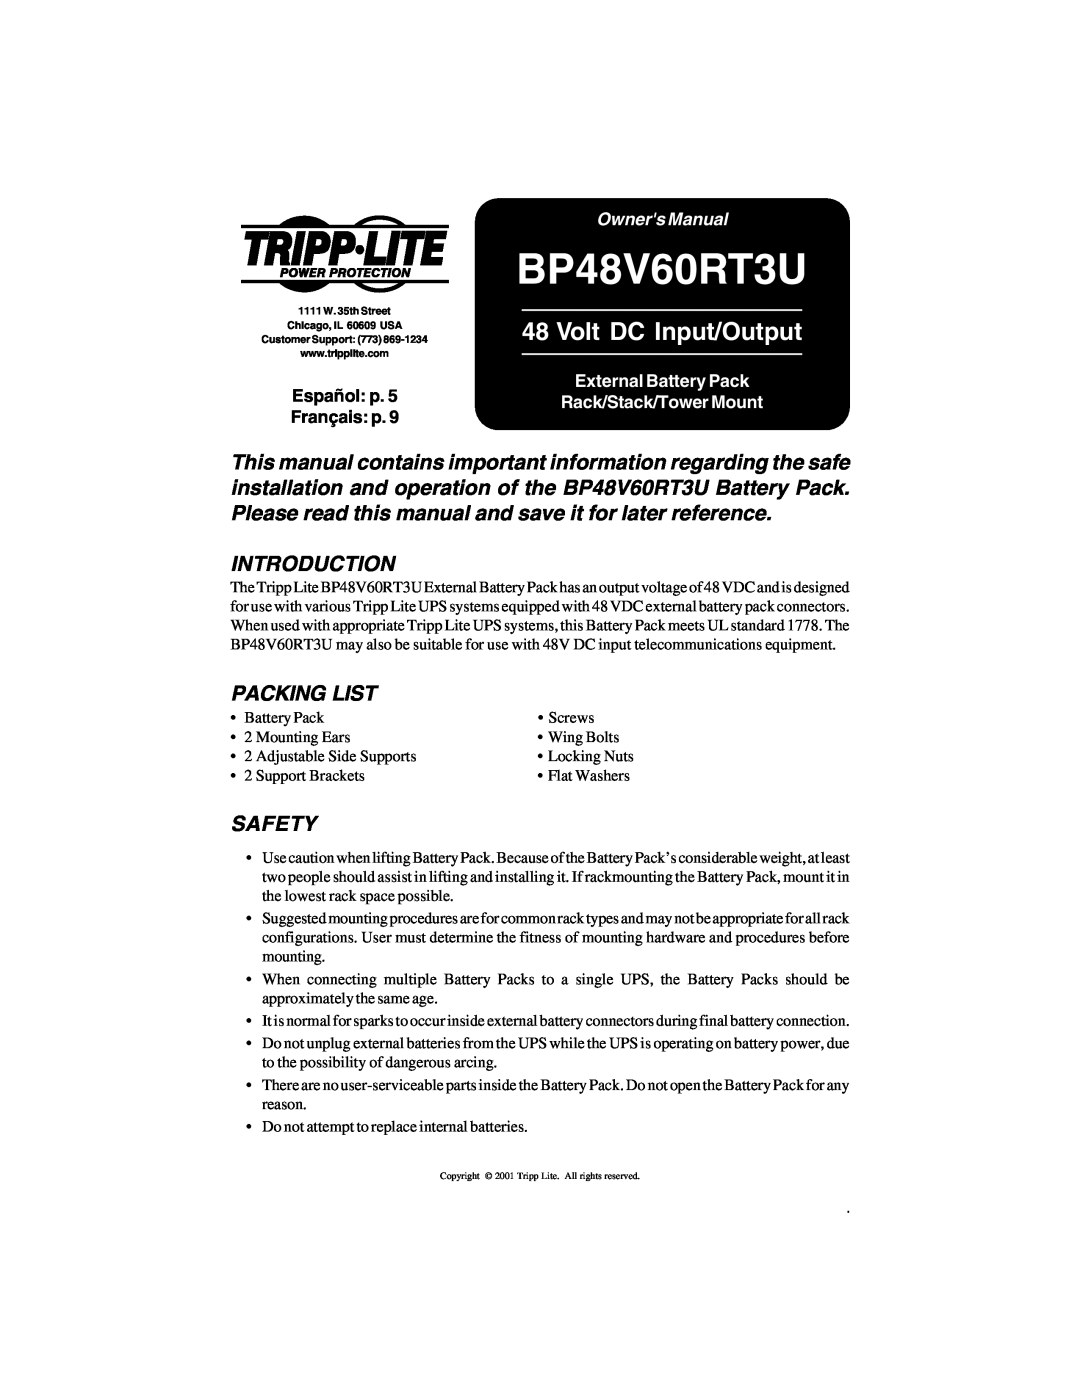 Tripp Lite BP48V60RT3U owner manual Introduction, Packing List, Safety, Owners Manual, Français p, Volt DC Input/Output 